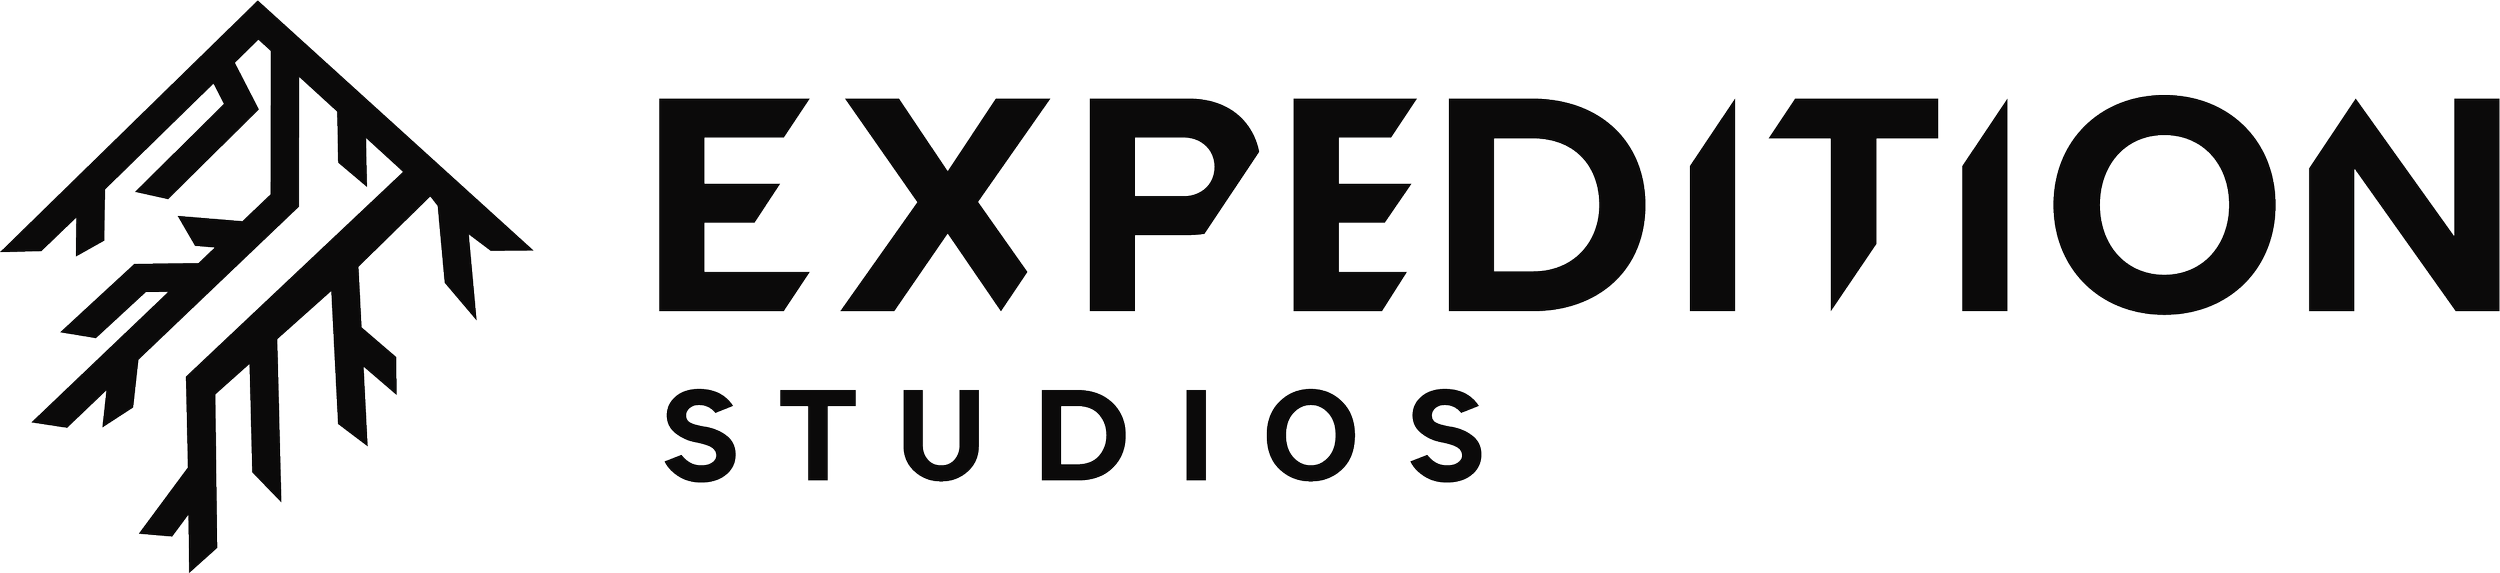 Expedition Studios Logo